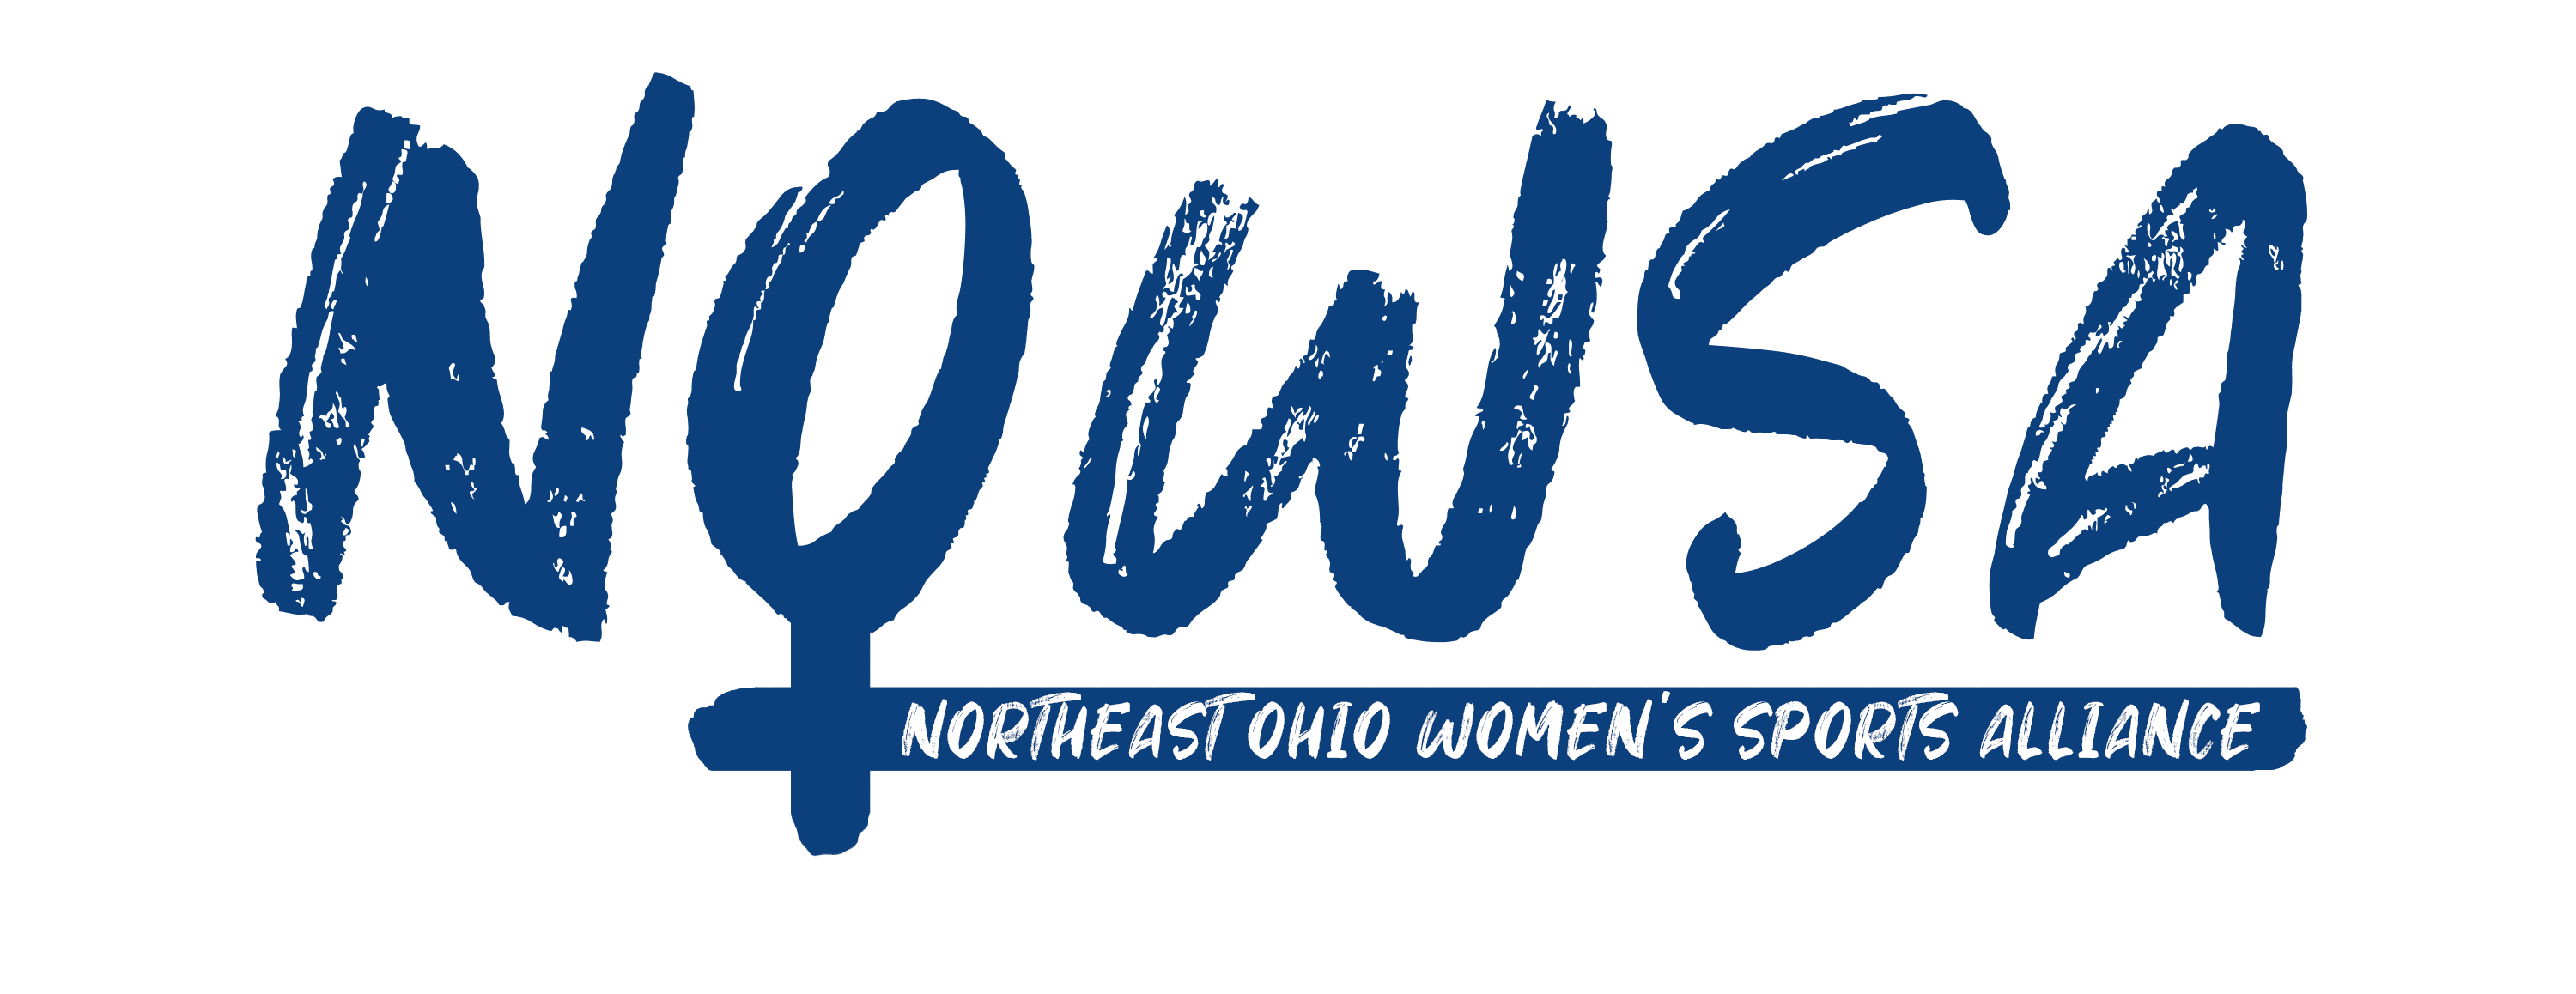 Northeast Ohio Women's Sports Alliance Logo